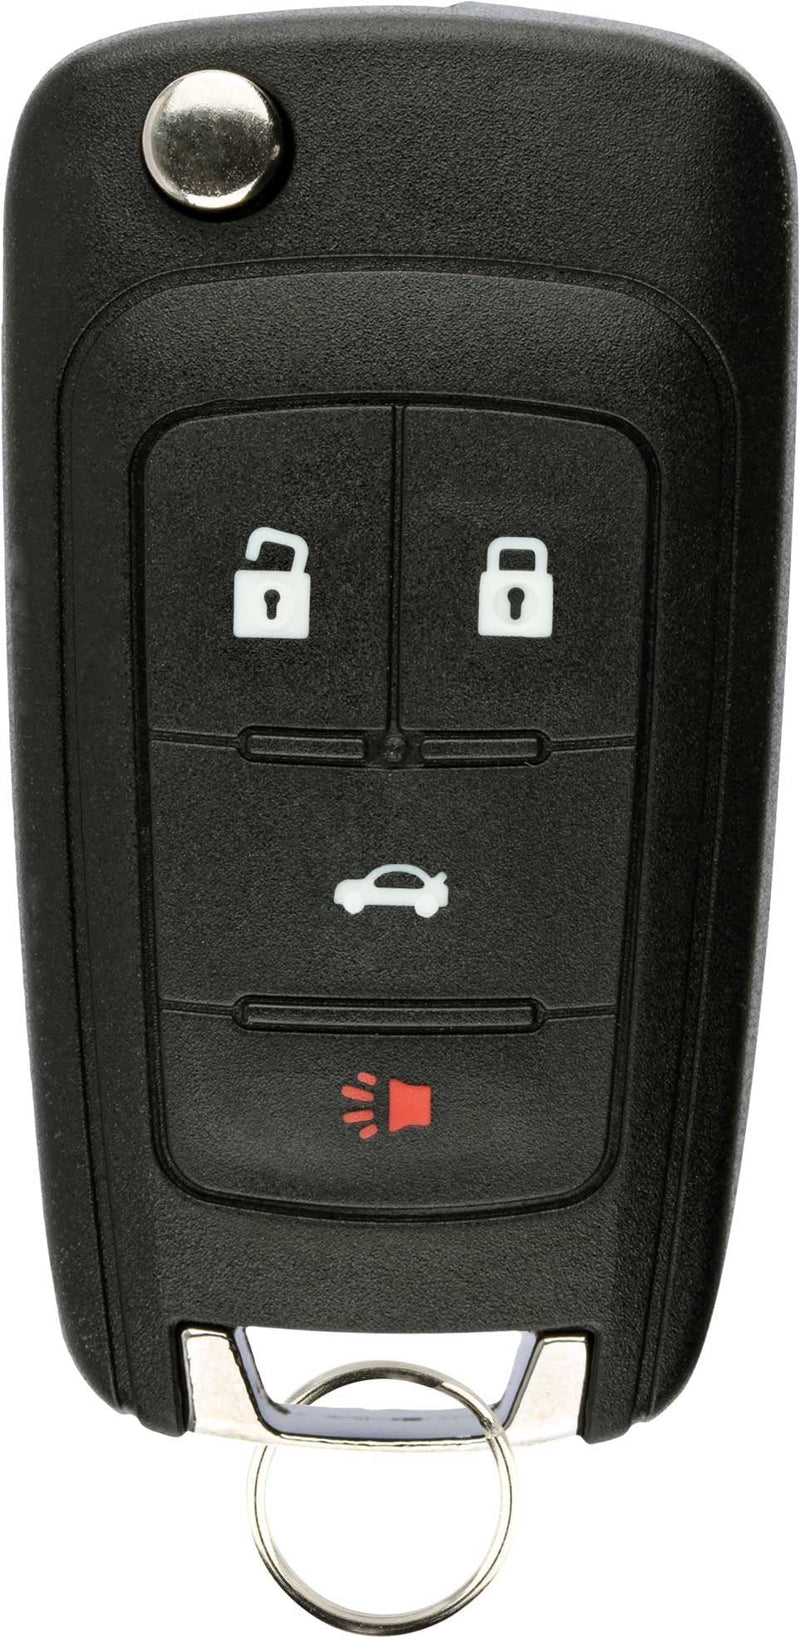  [AUSTRALIA] - KeylessOption Keyless Entry Remote Control Car Uncut Flip Key Fob Replacement for OHT01060512